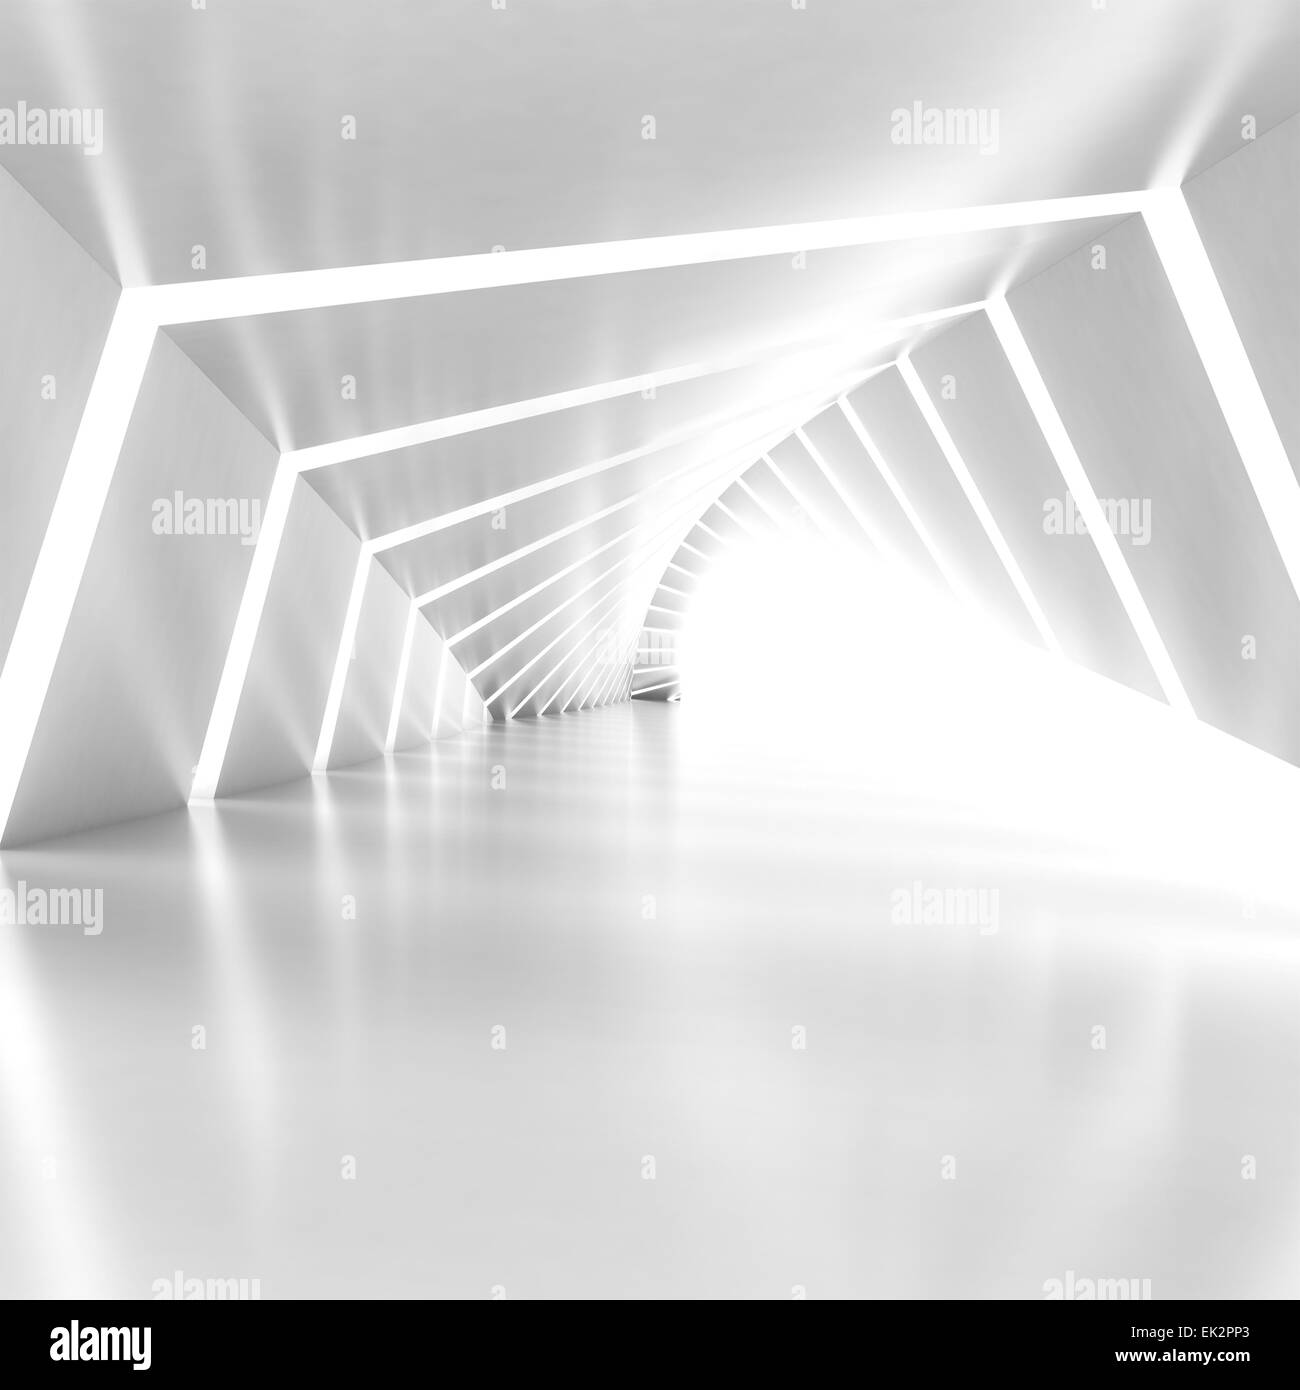 Abstract empty illuminated white shining bent corridor interior, 3d render illustration, square composition Stock Photo